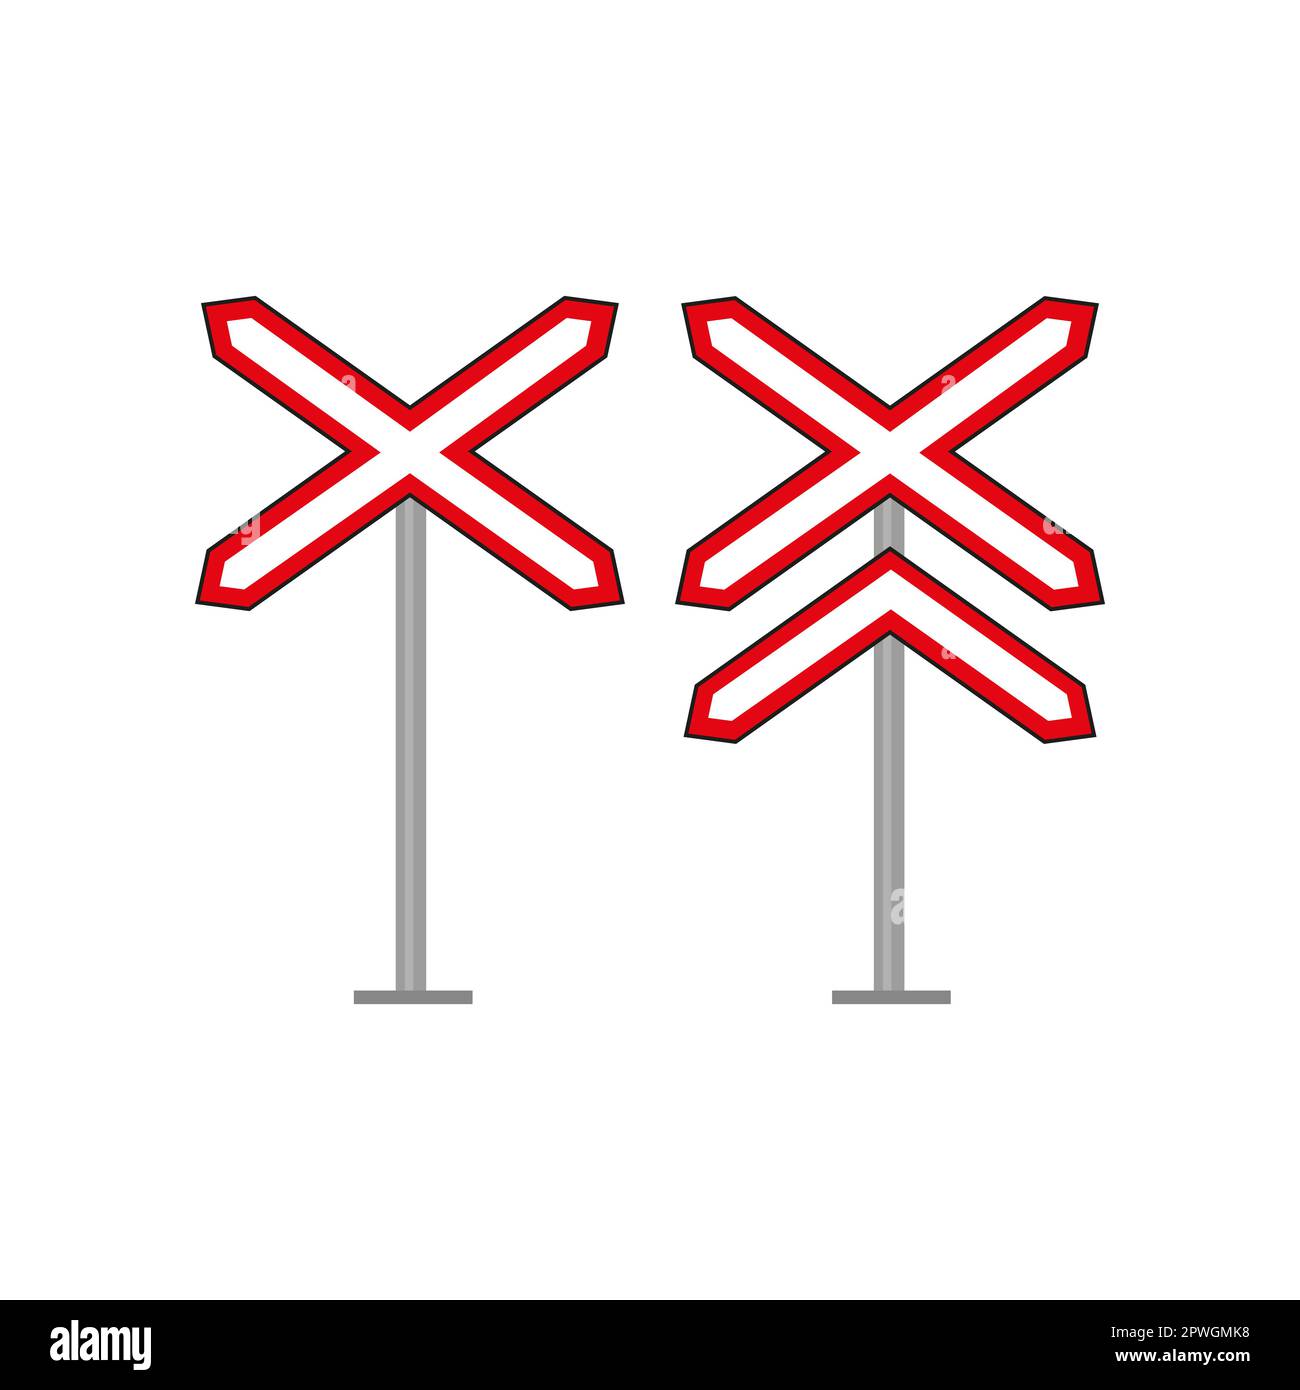 Railroad crossing sign vector illustration Stock Vector